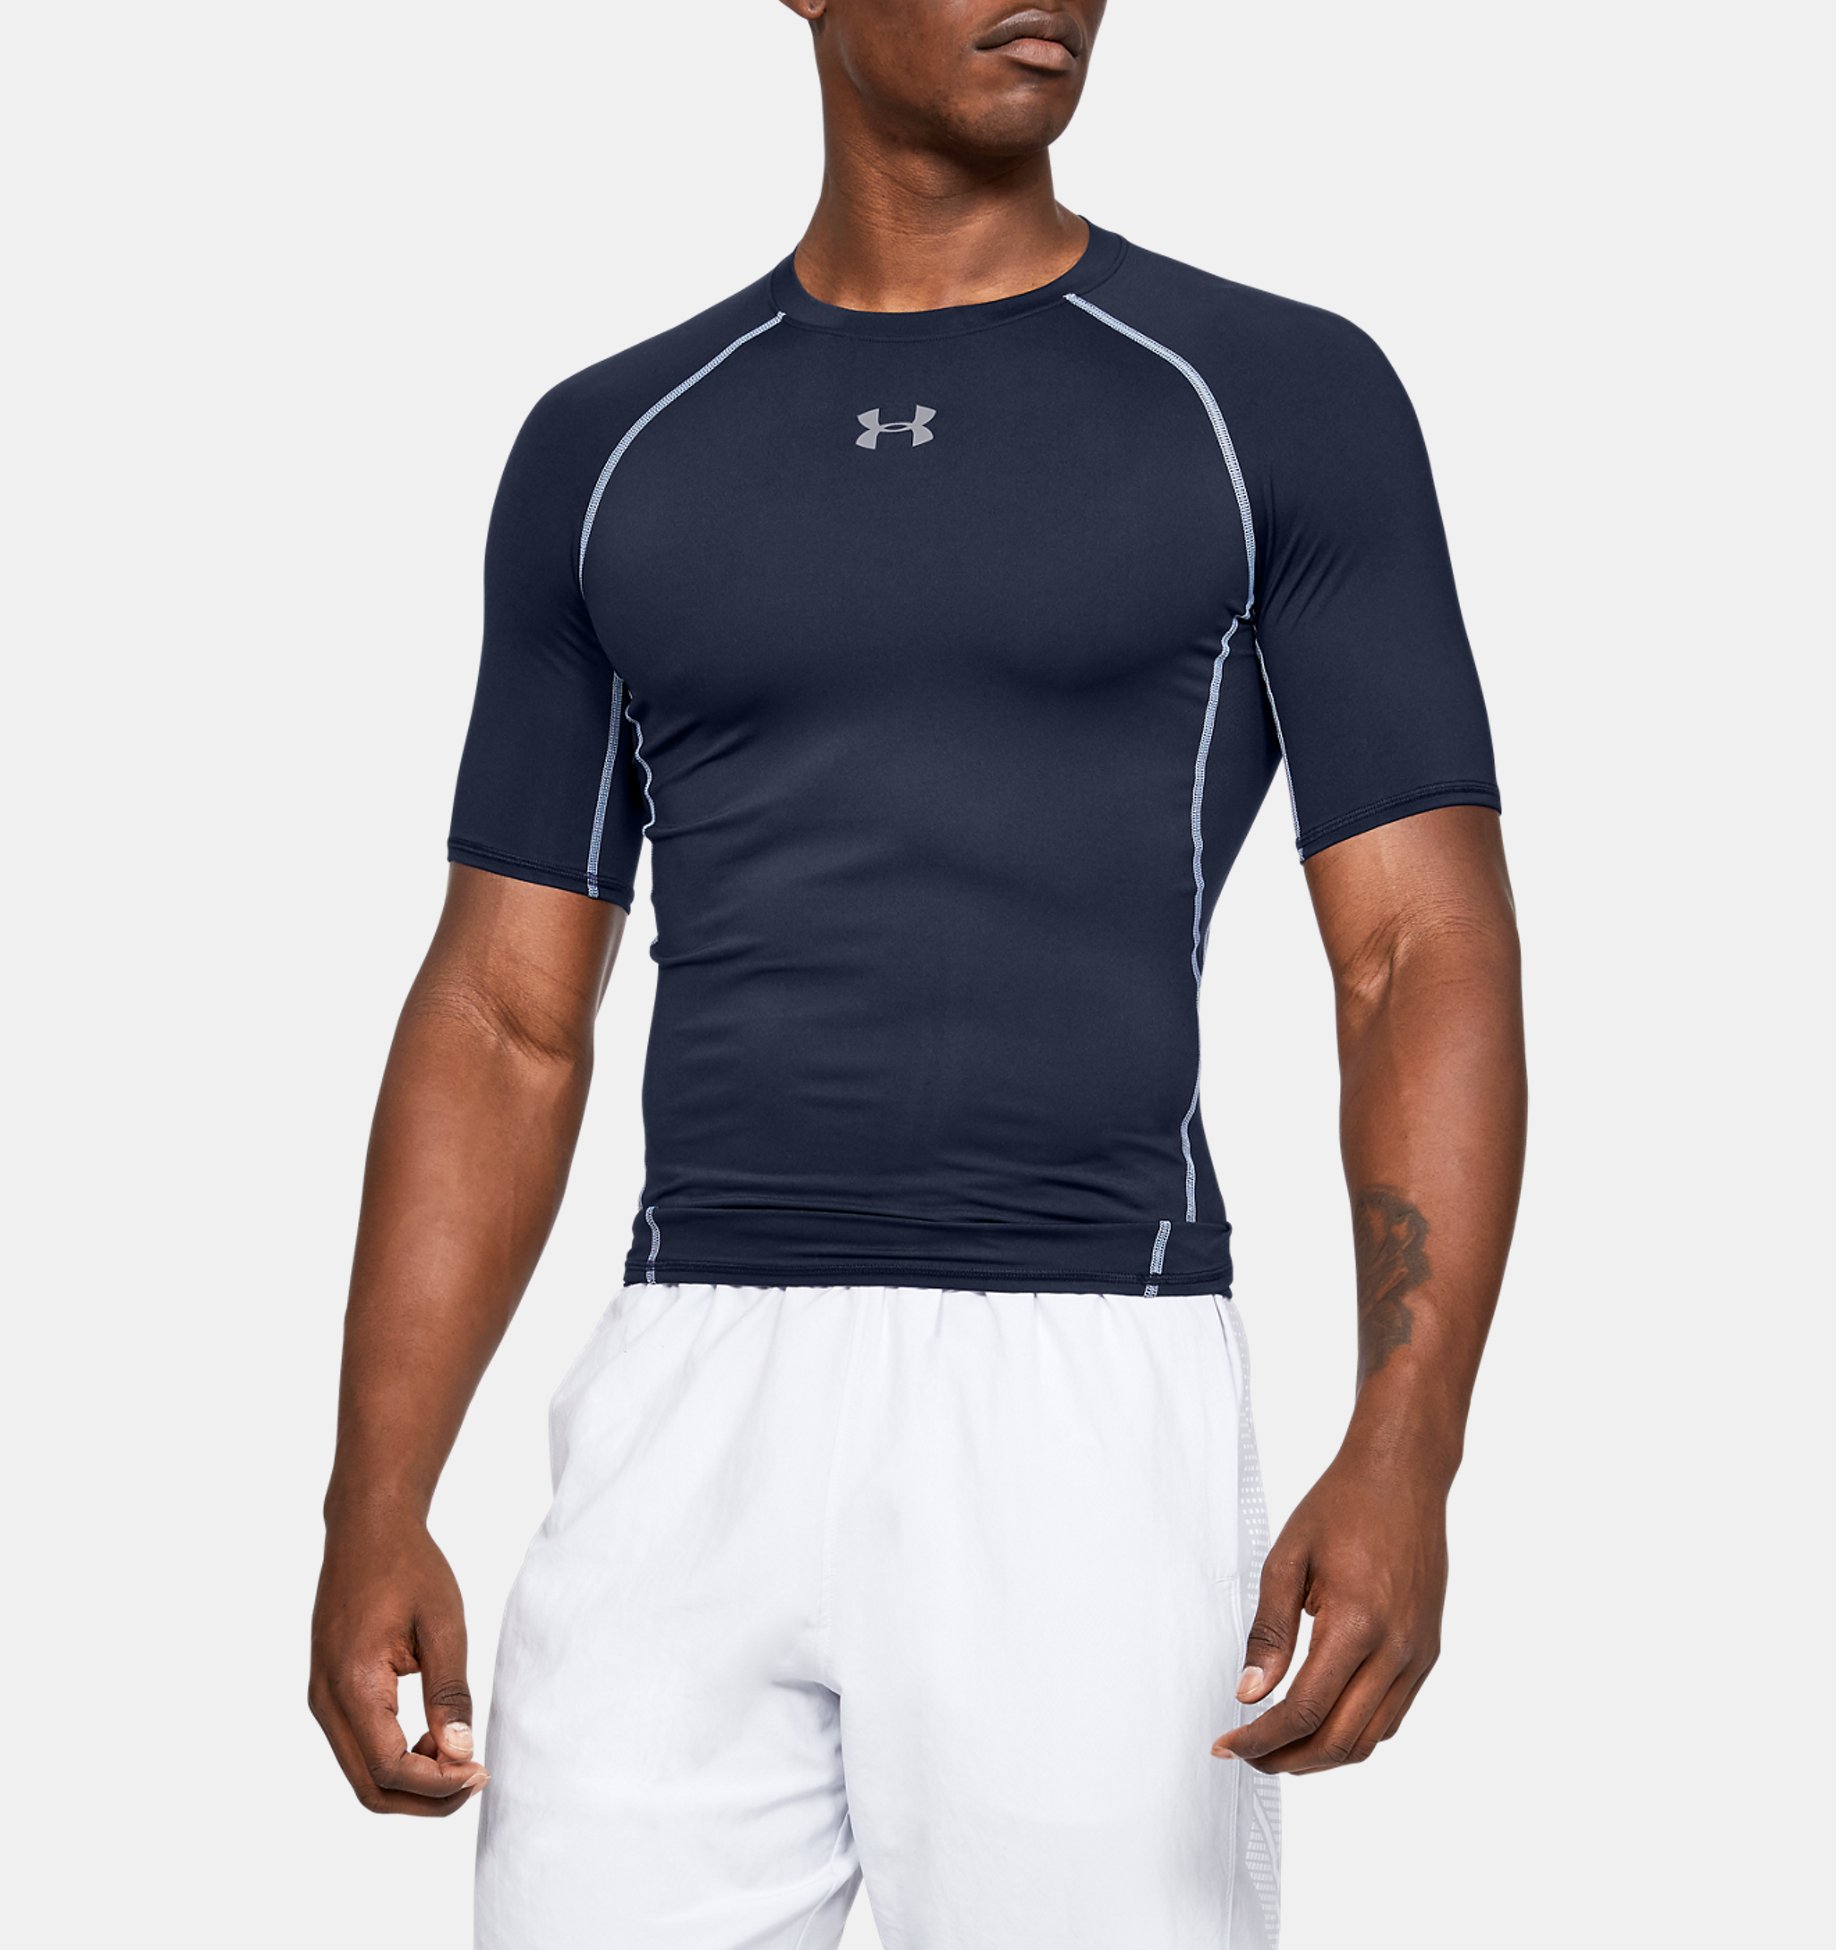 Compression Shirt Vest for Men Dry Fit Comfort Athletic Sport Short Sleeve T-Shirt for Workouts